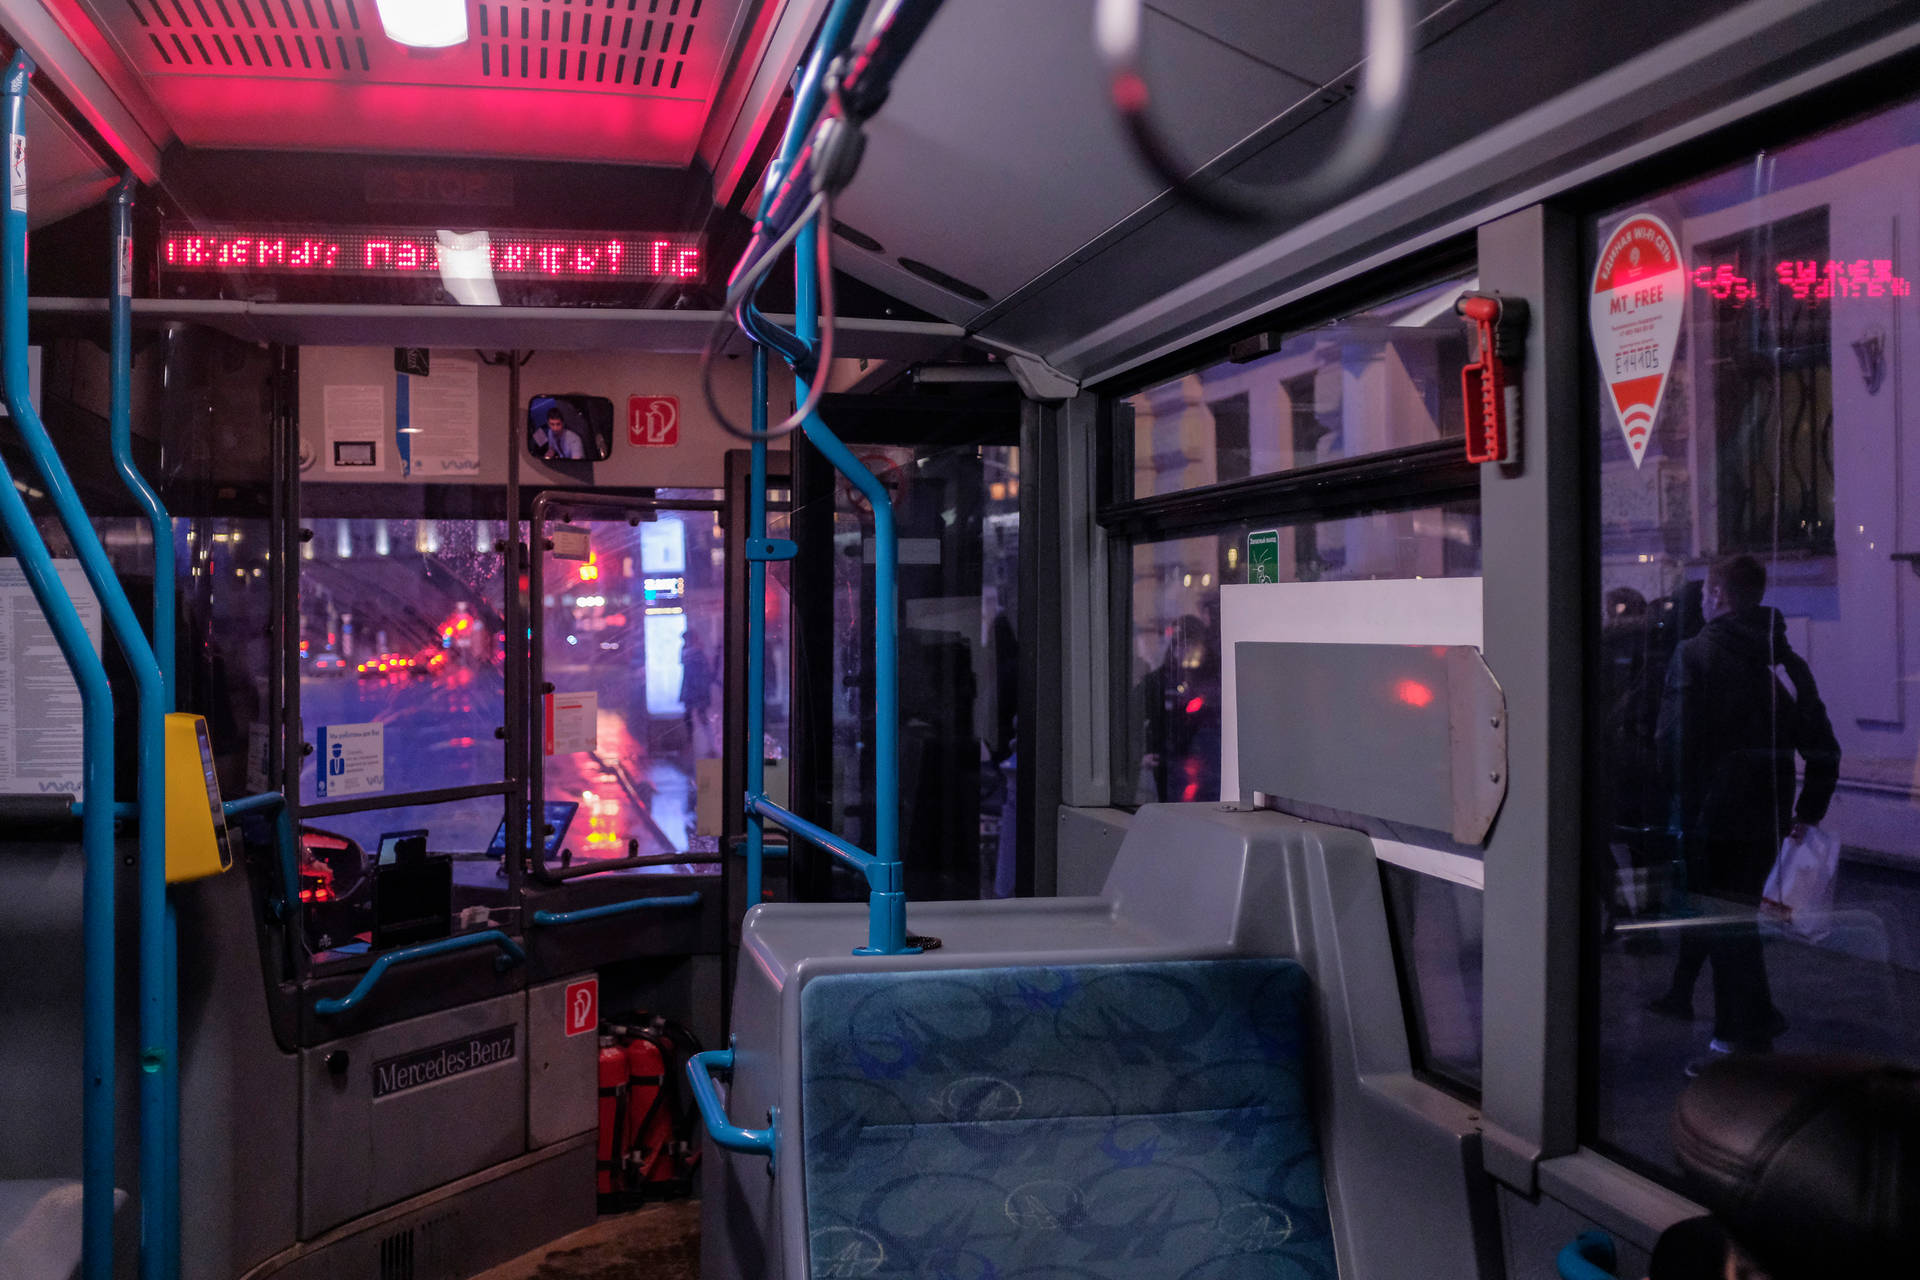 Neon Purple Aesthetic Bus Picture